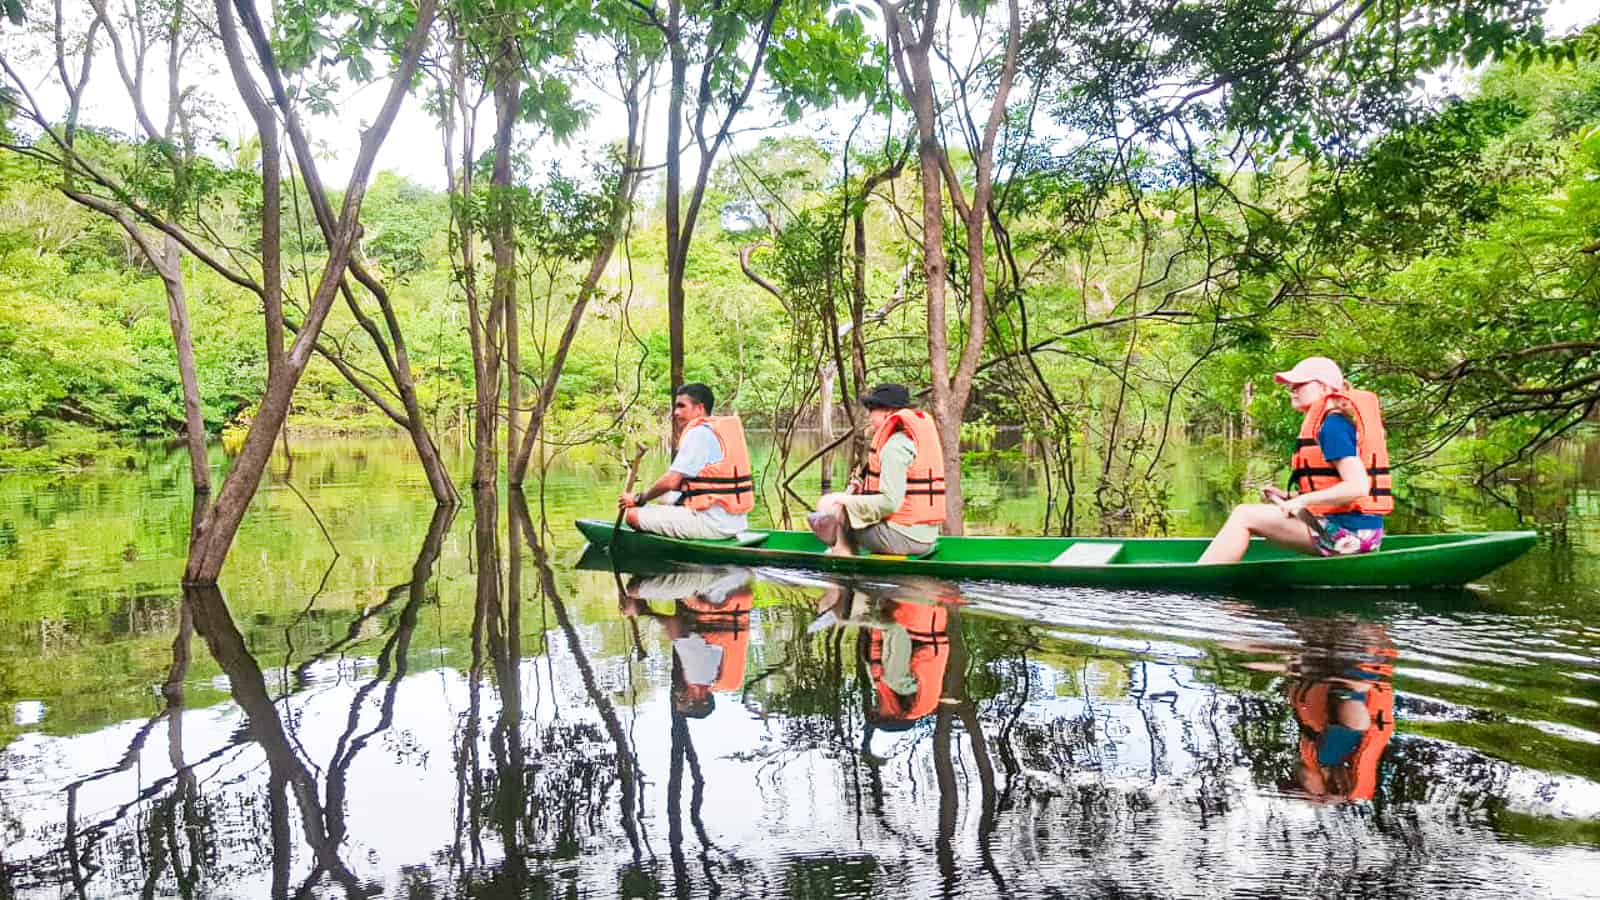 Brazil - Amazon Basin - Canoe Trip with Juma Lodge